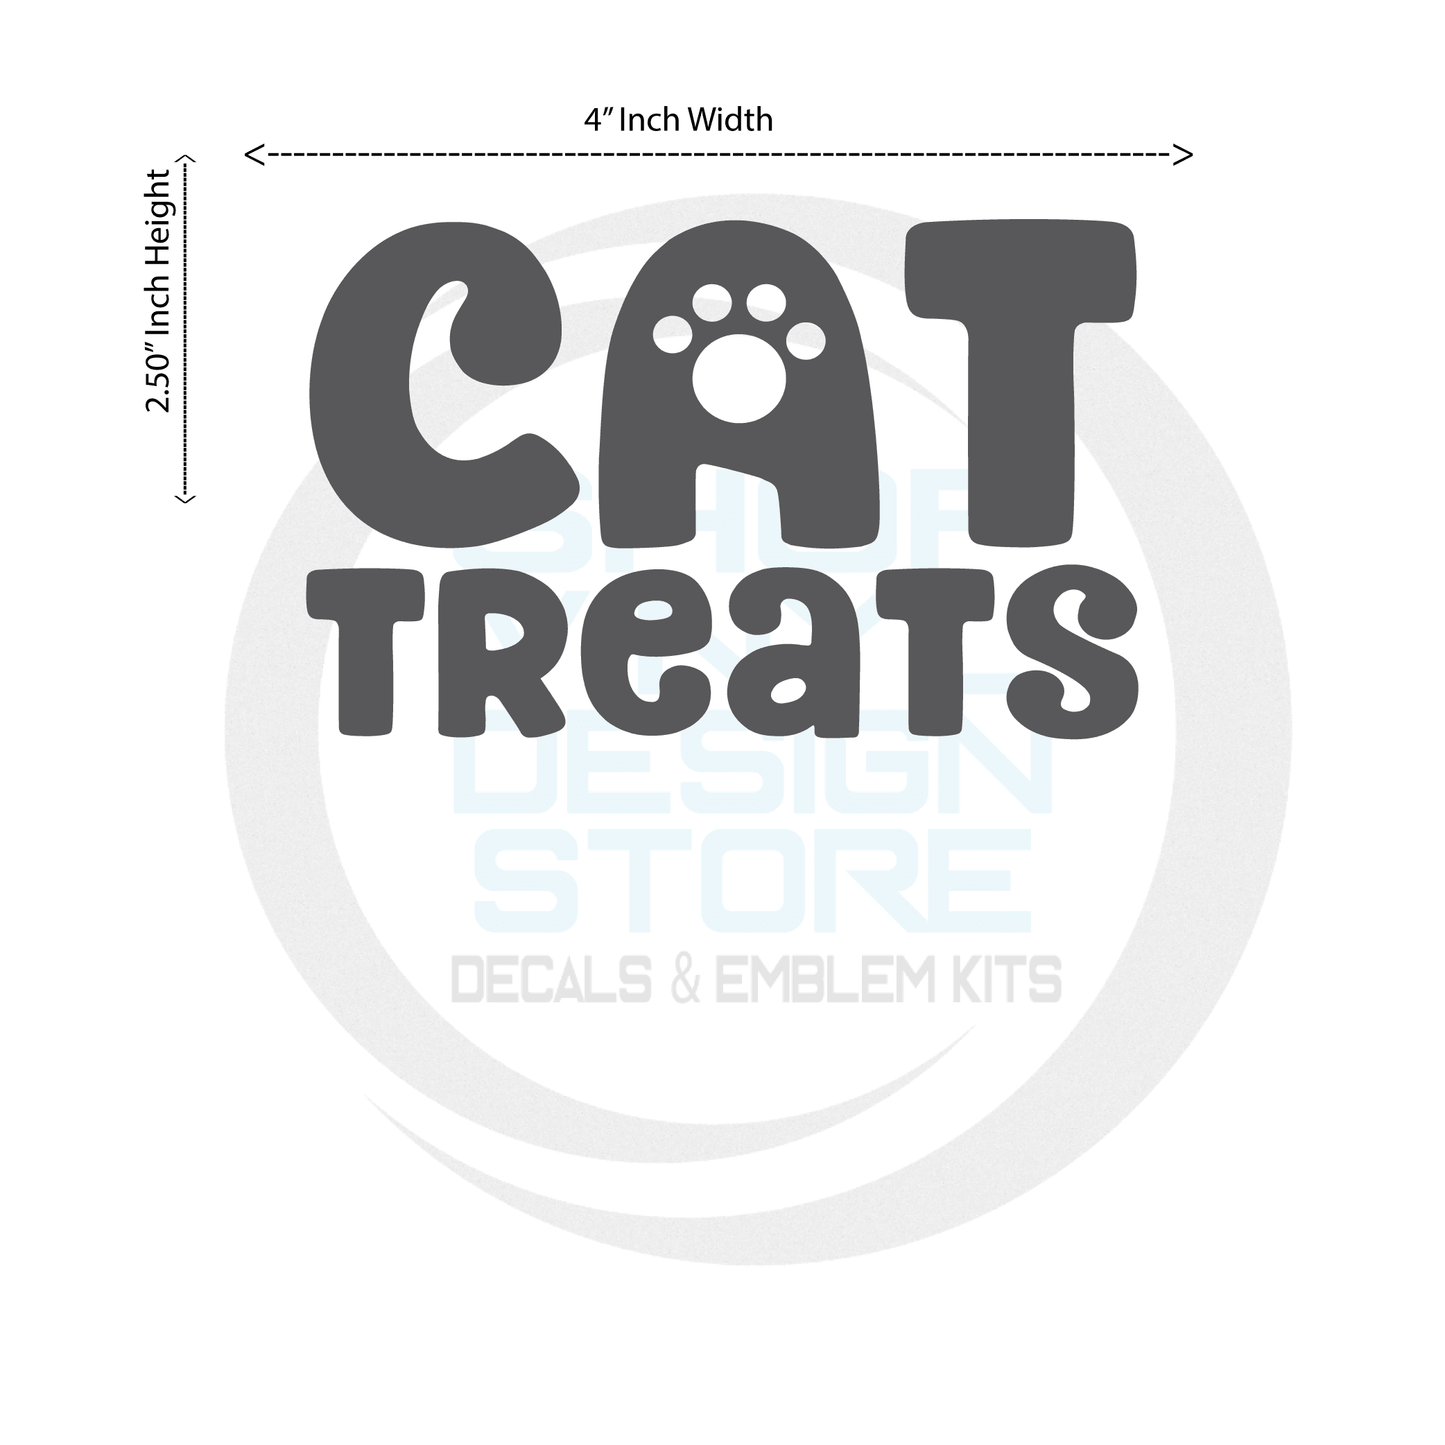 ShopVinylDesignStore.com Cat Treats with Paw Print Wide 4"W x 2.50"H Shop Vinyl Design decals stickers